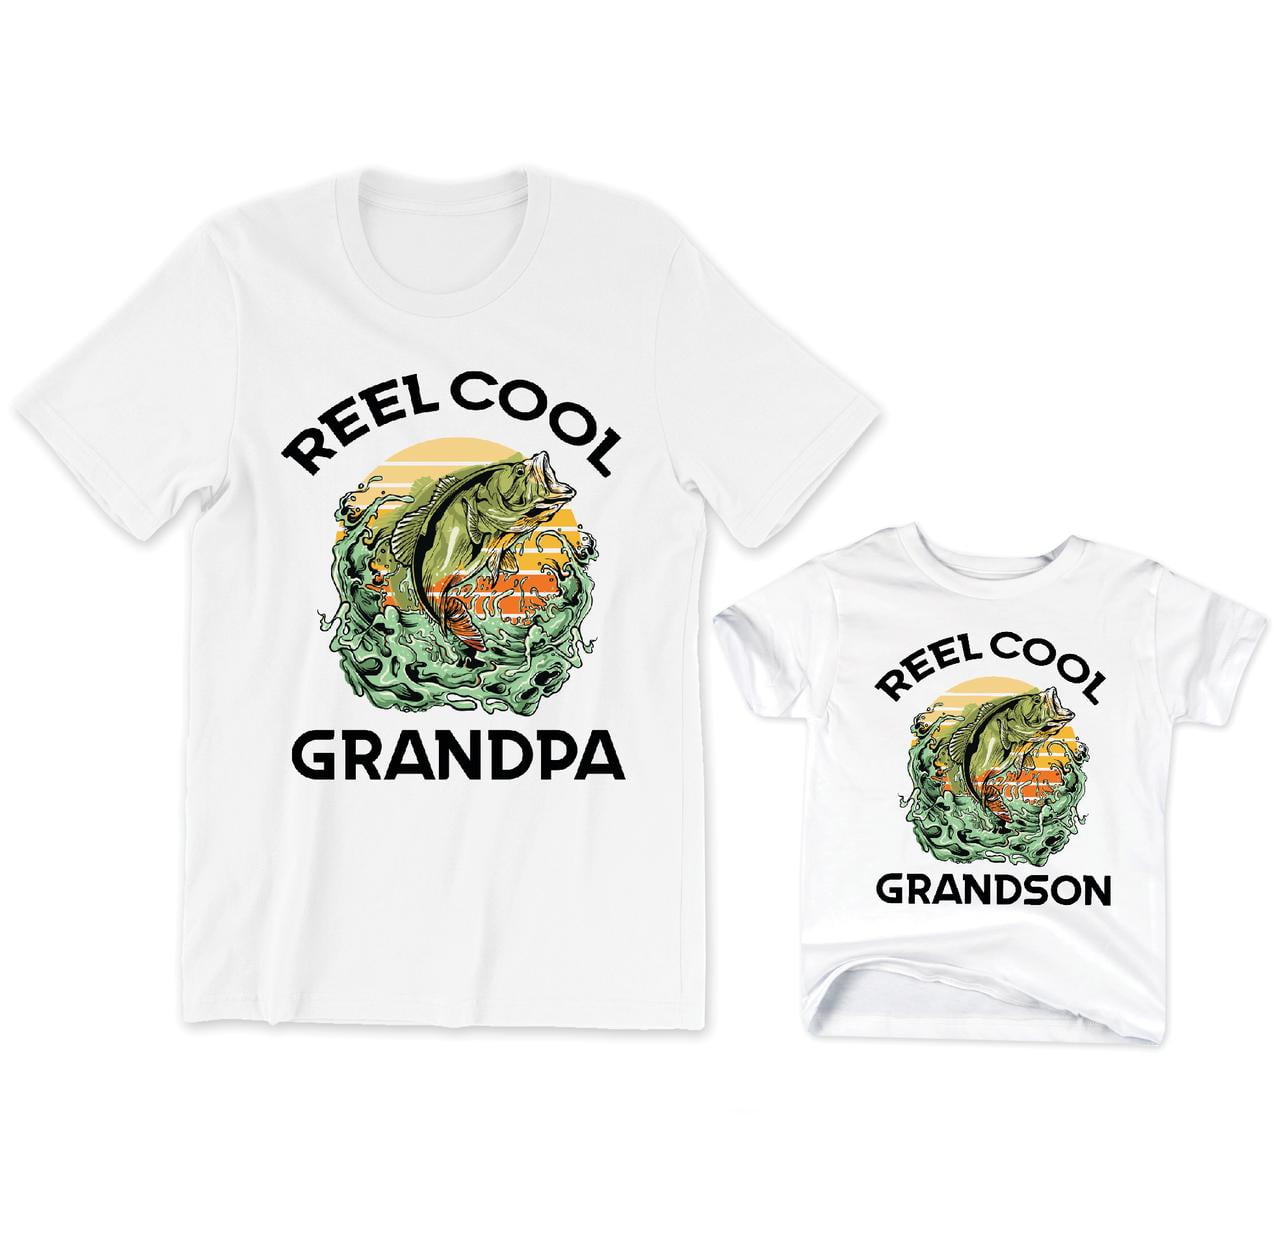 Reel Cool Grandpa Men's T-Shirt Funny Fish Graphic Tee Reel Cool Grandson  Kids Toddler Shirt Youth 